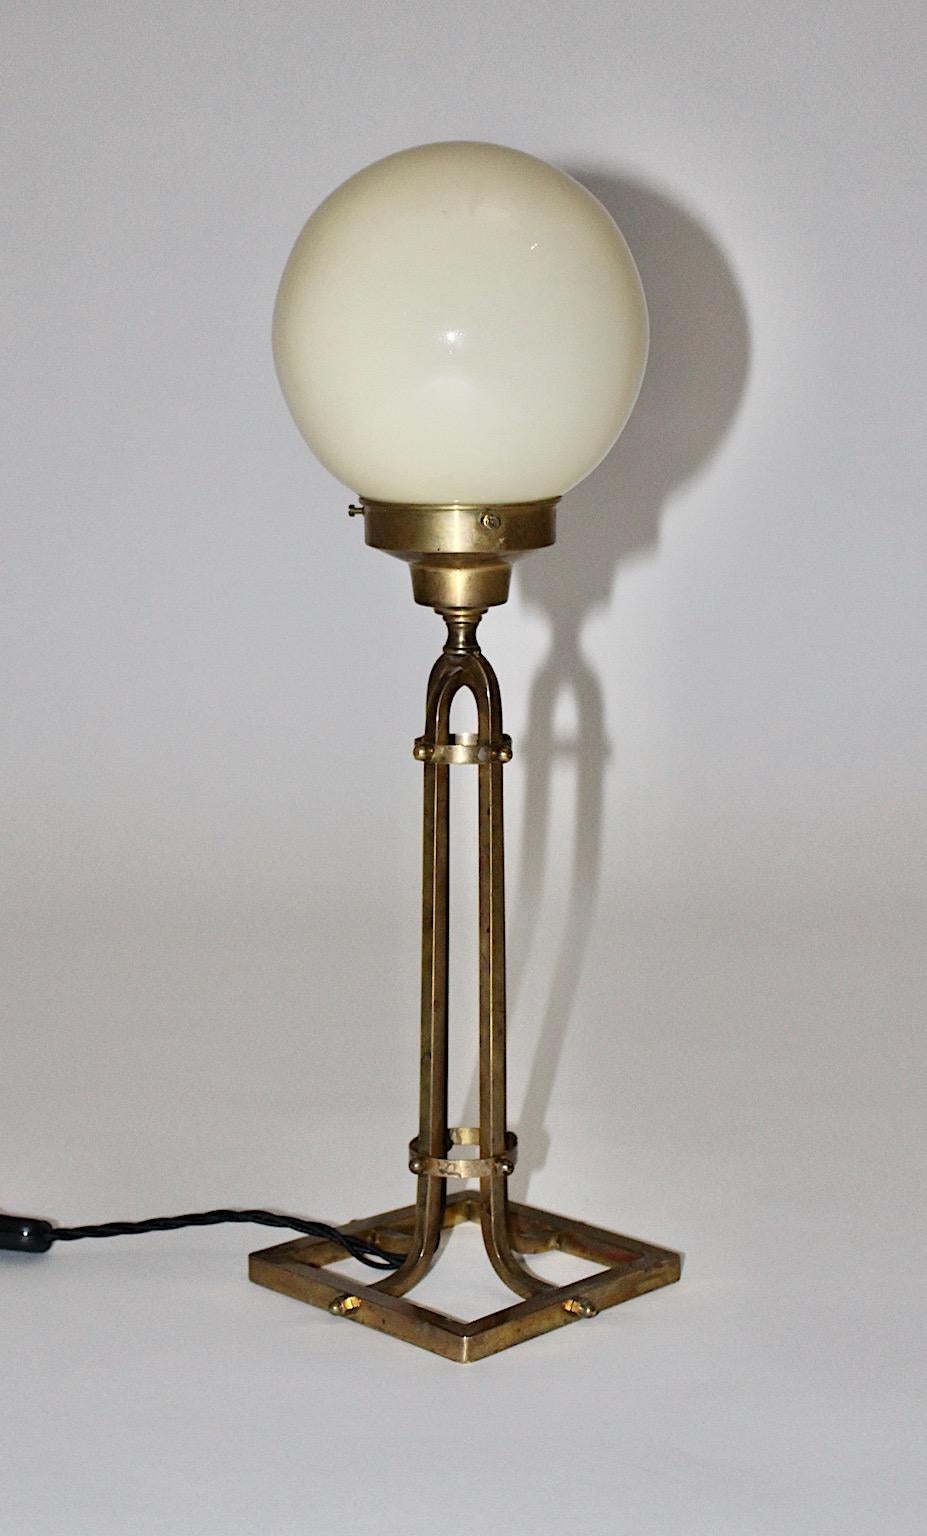 1950's lamp styles